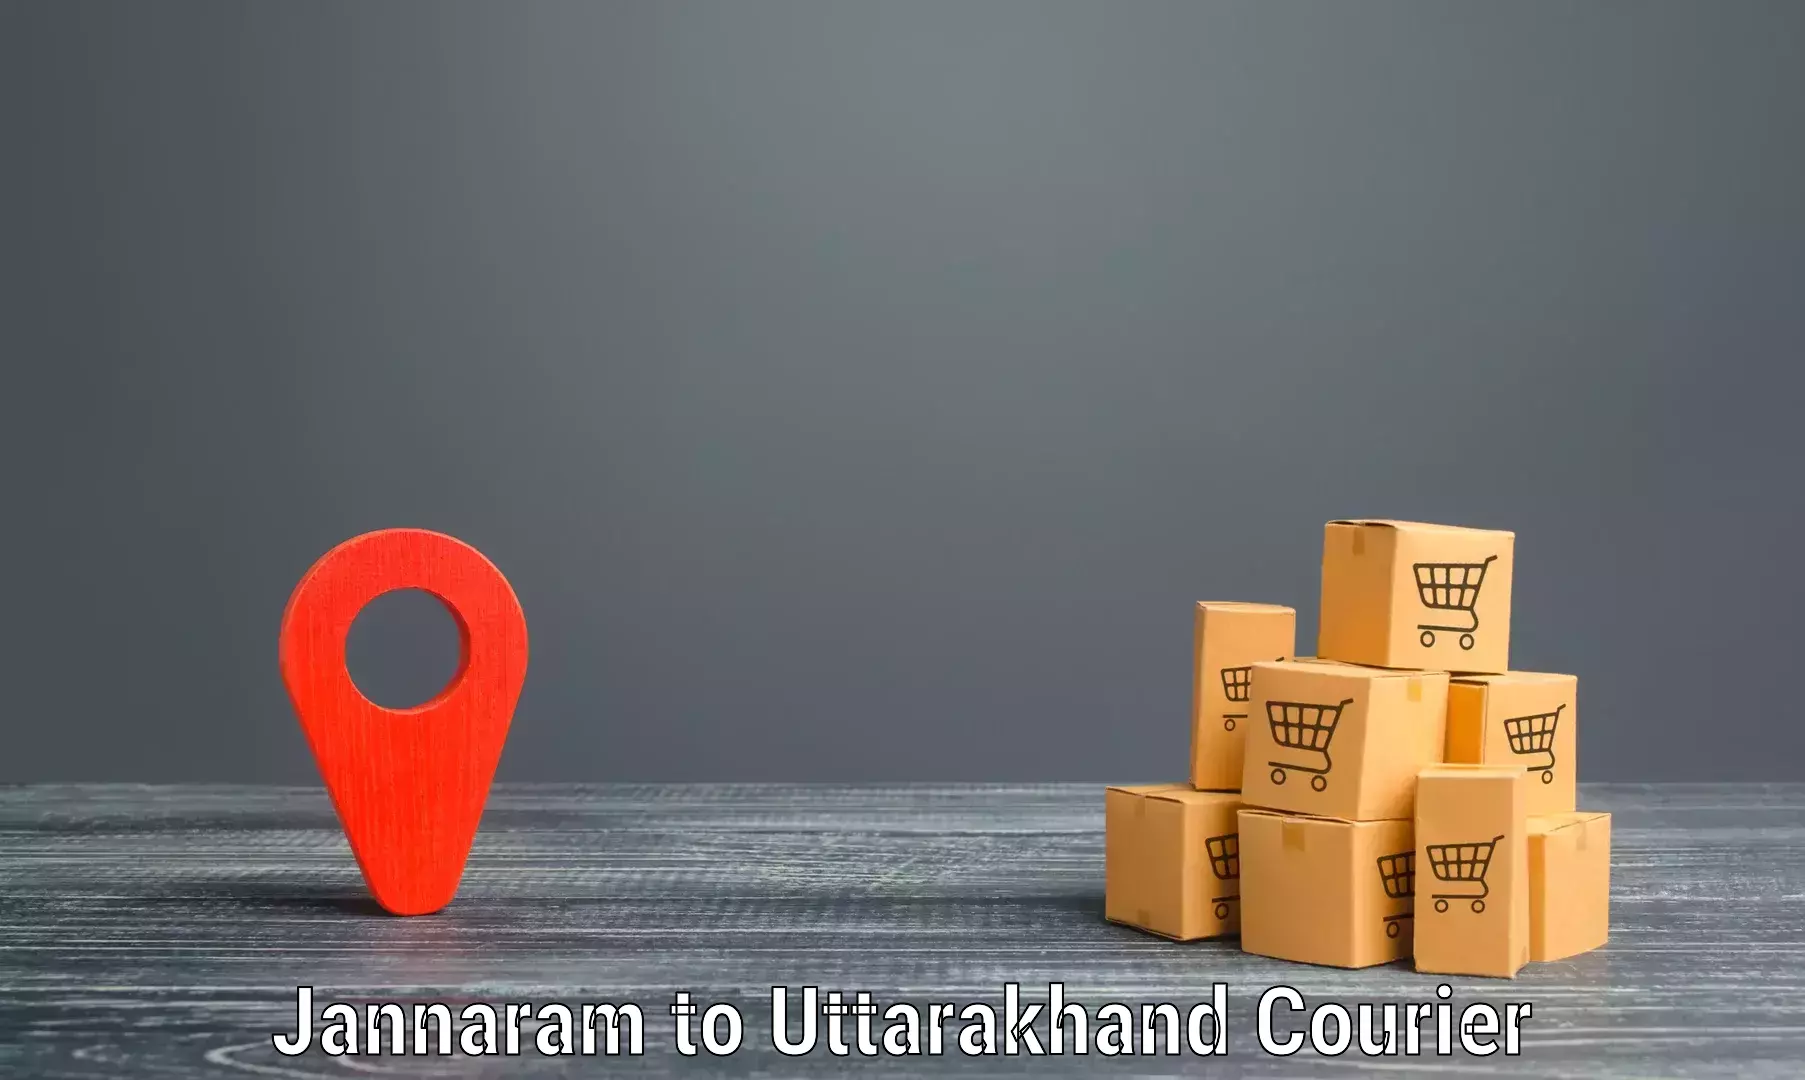 Next-day freight services Jannaram to Gopeshwar